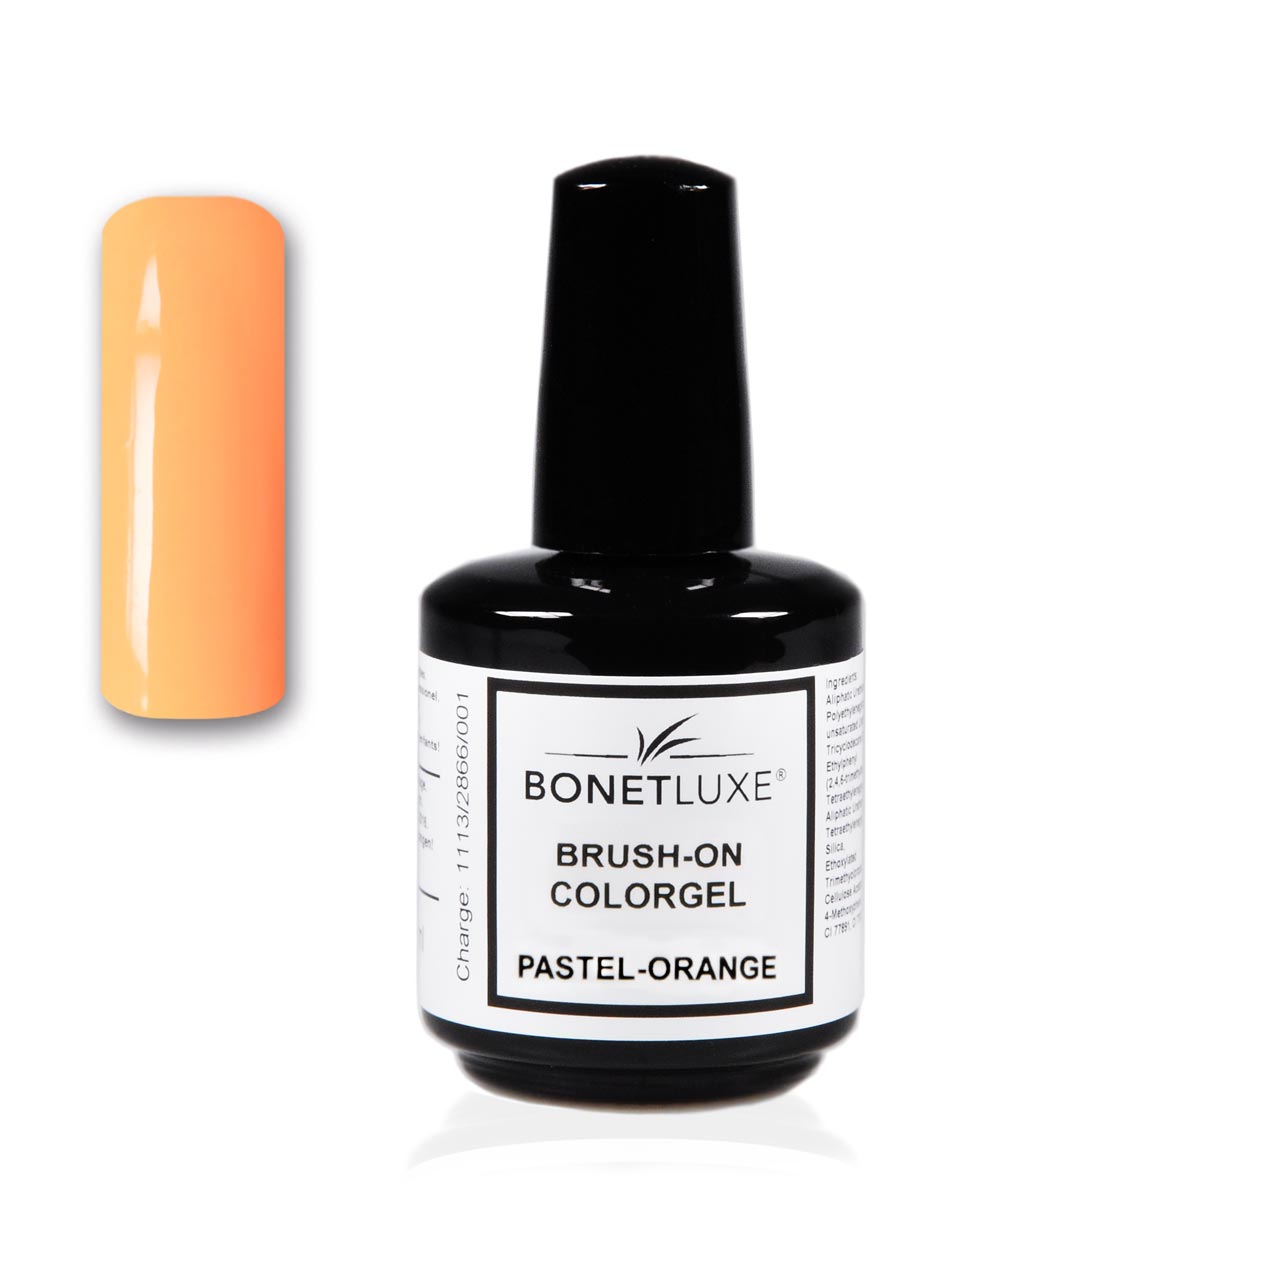 Bonetluxe Brush-On Colorgel Pastel-Orange